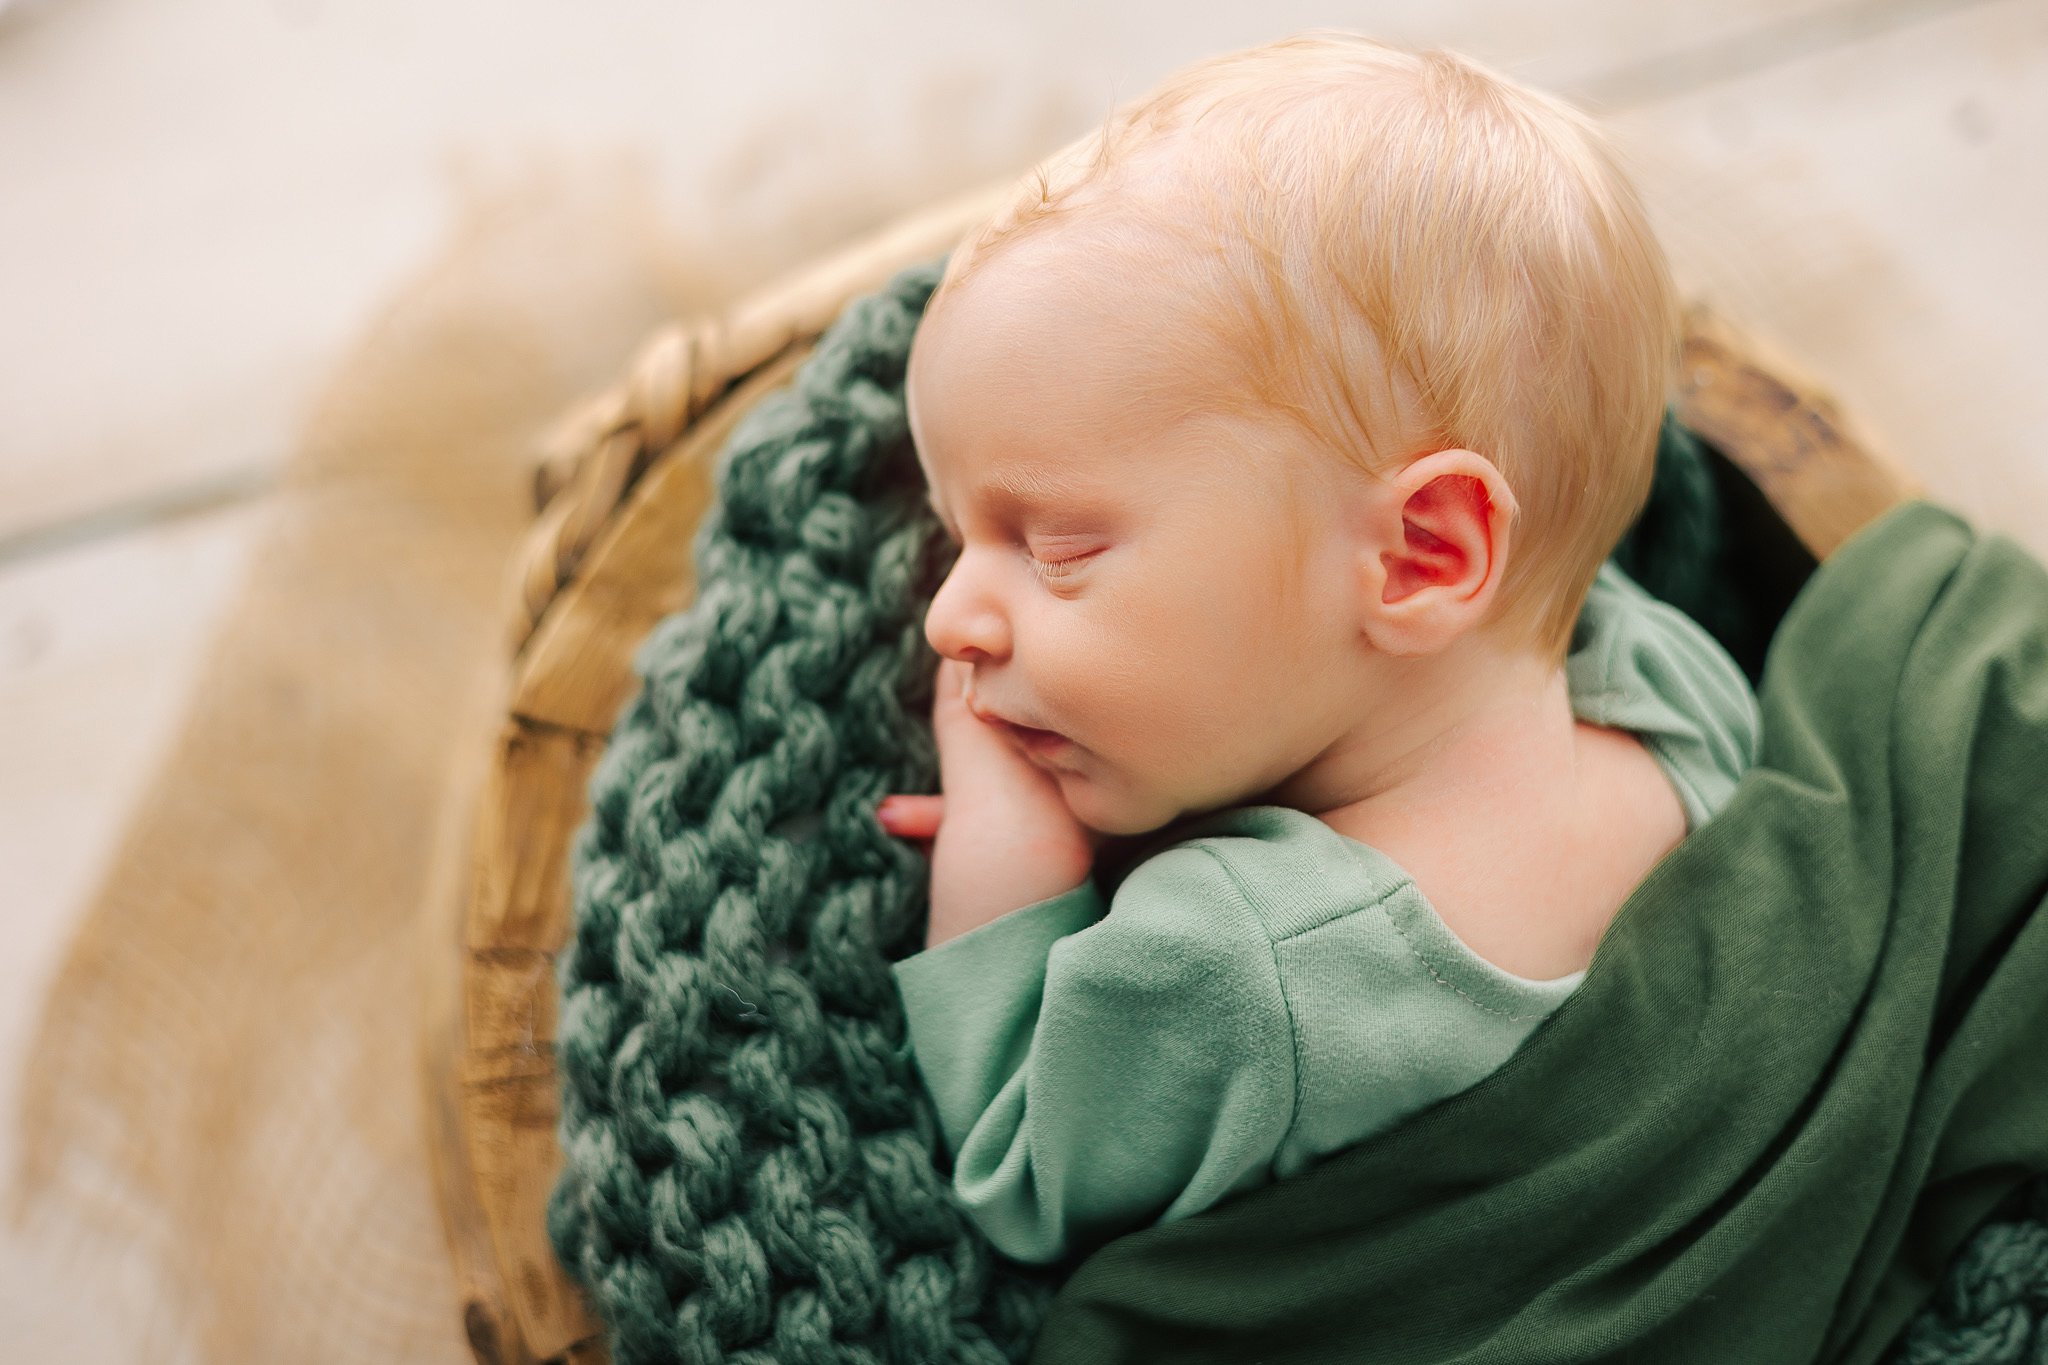 A newborn baby in a green onesie sleeps in a basket after visiting a savannah chiropractor